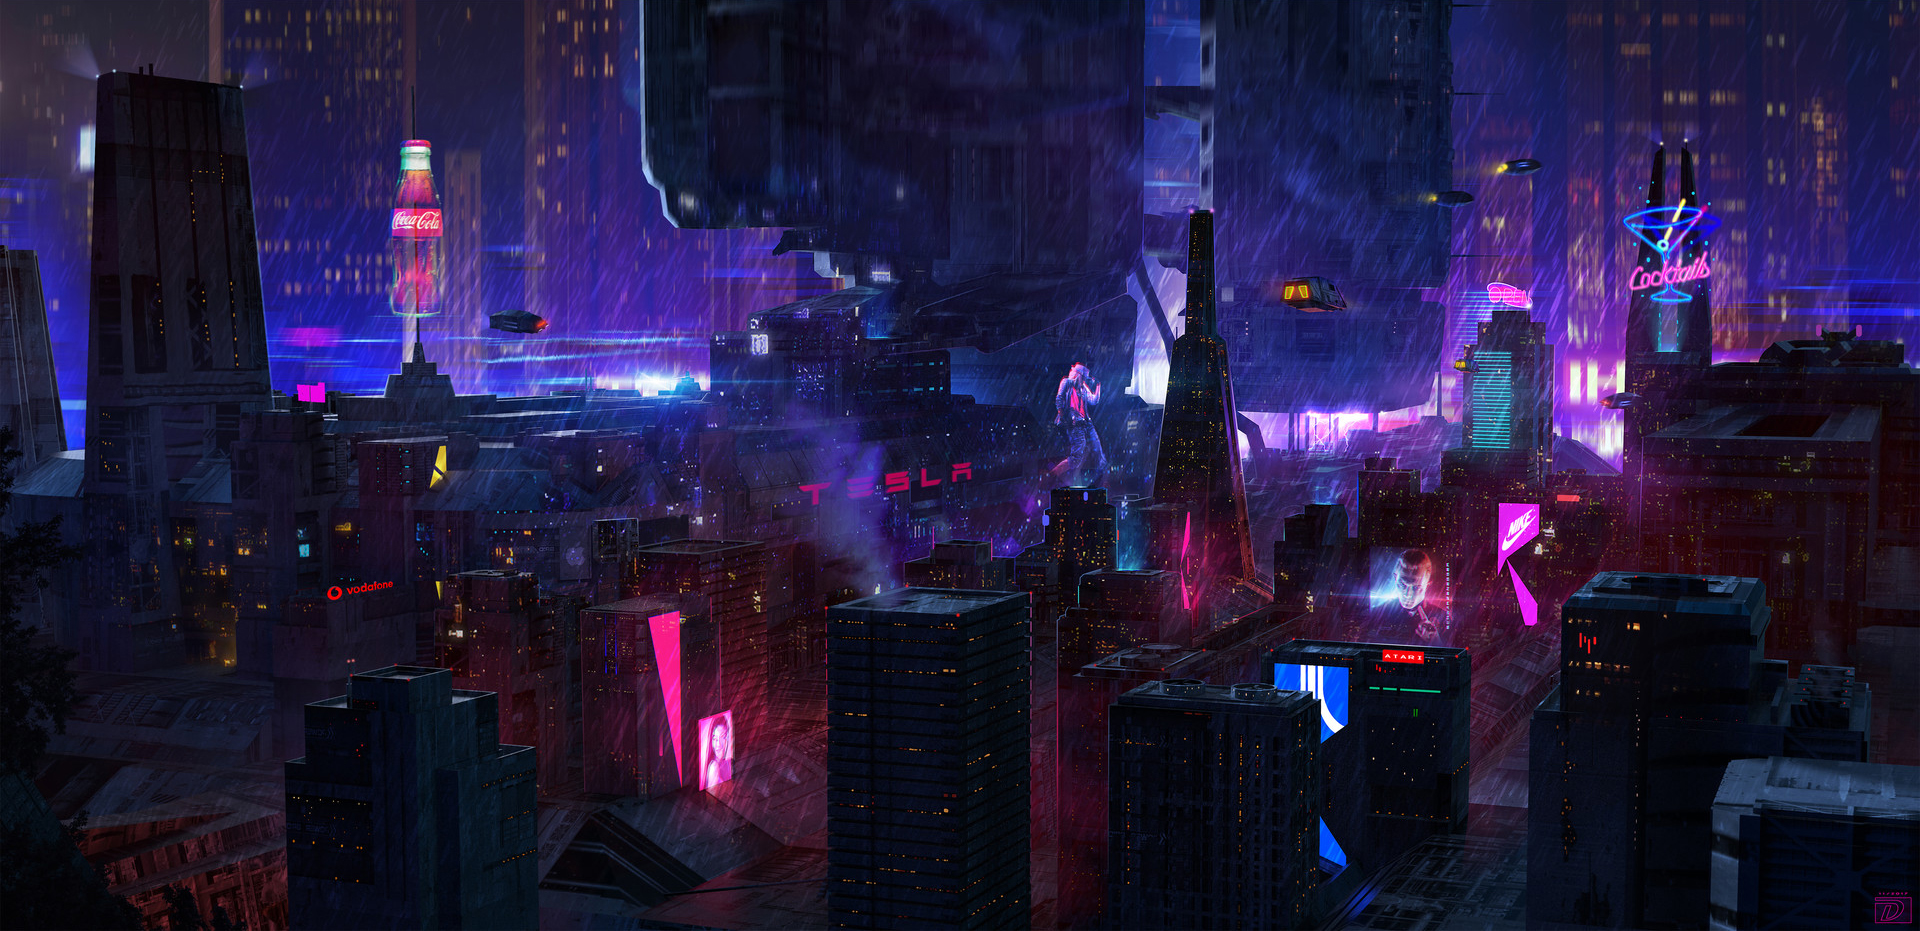 Cyberpunk City Rain Building Neon Glow Neon Cityscape Night Flying Car Science Fiction 1920x931